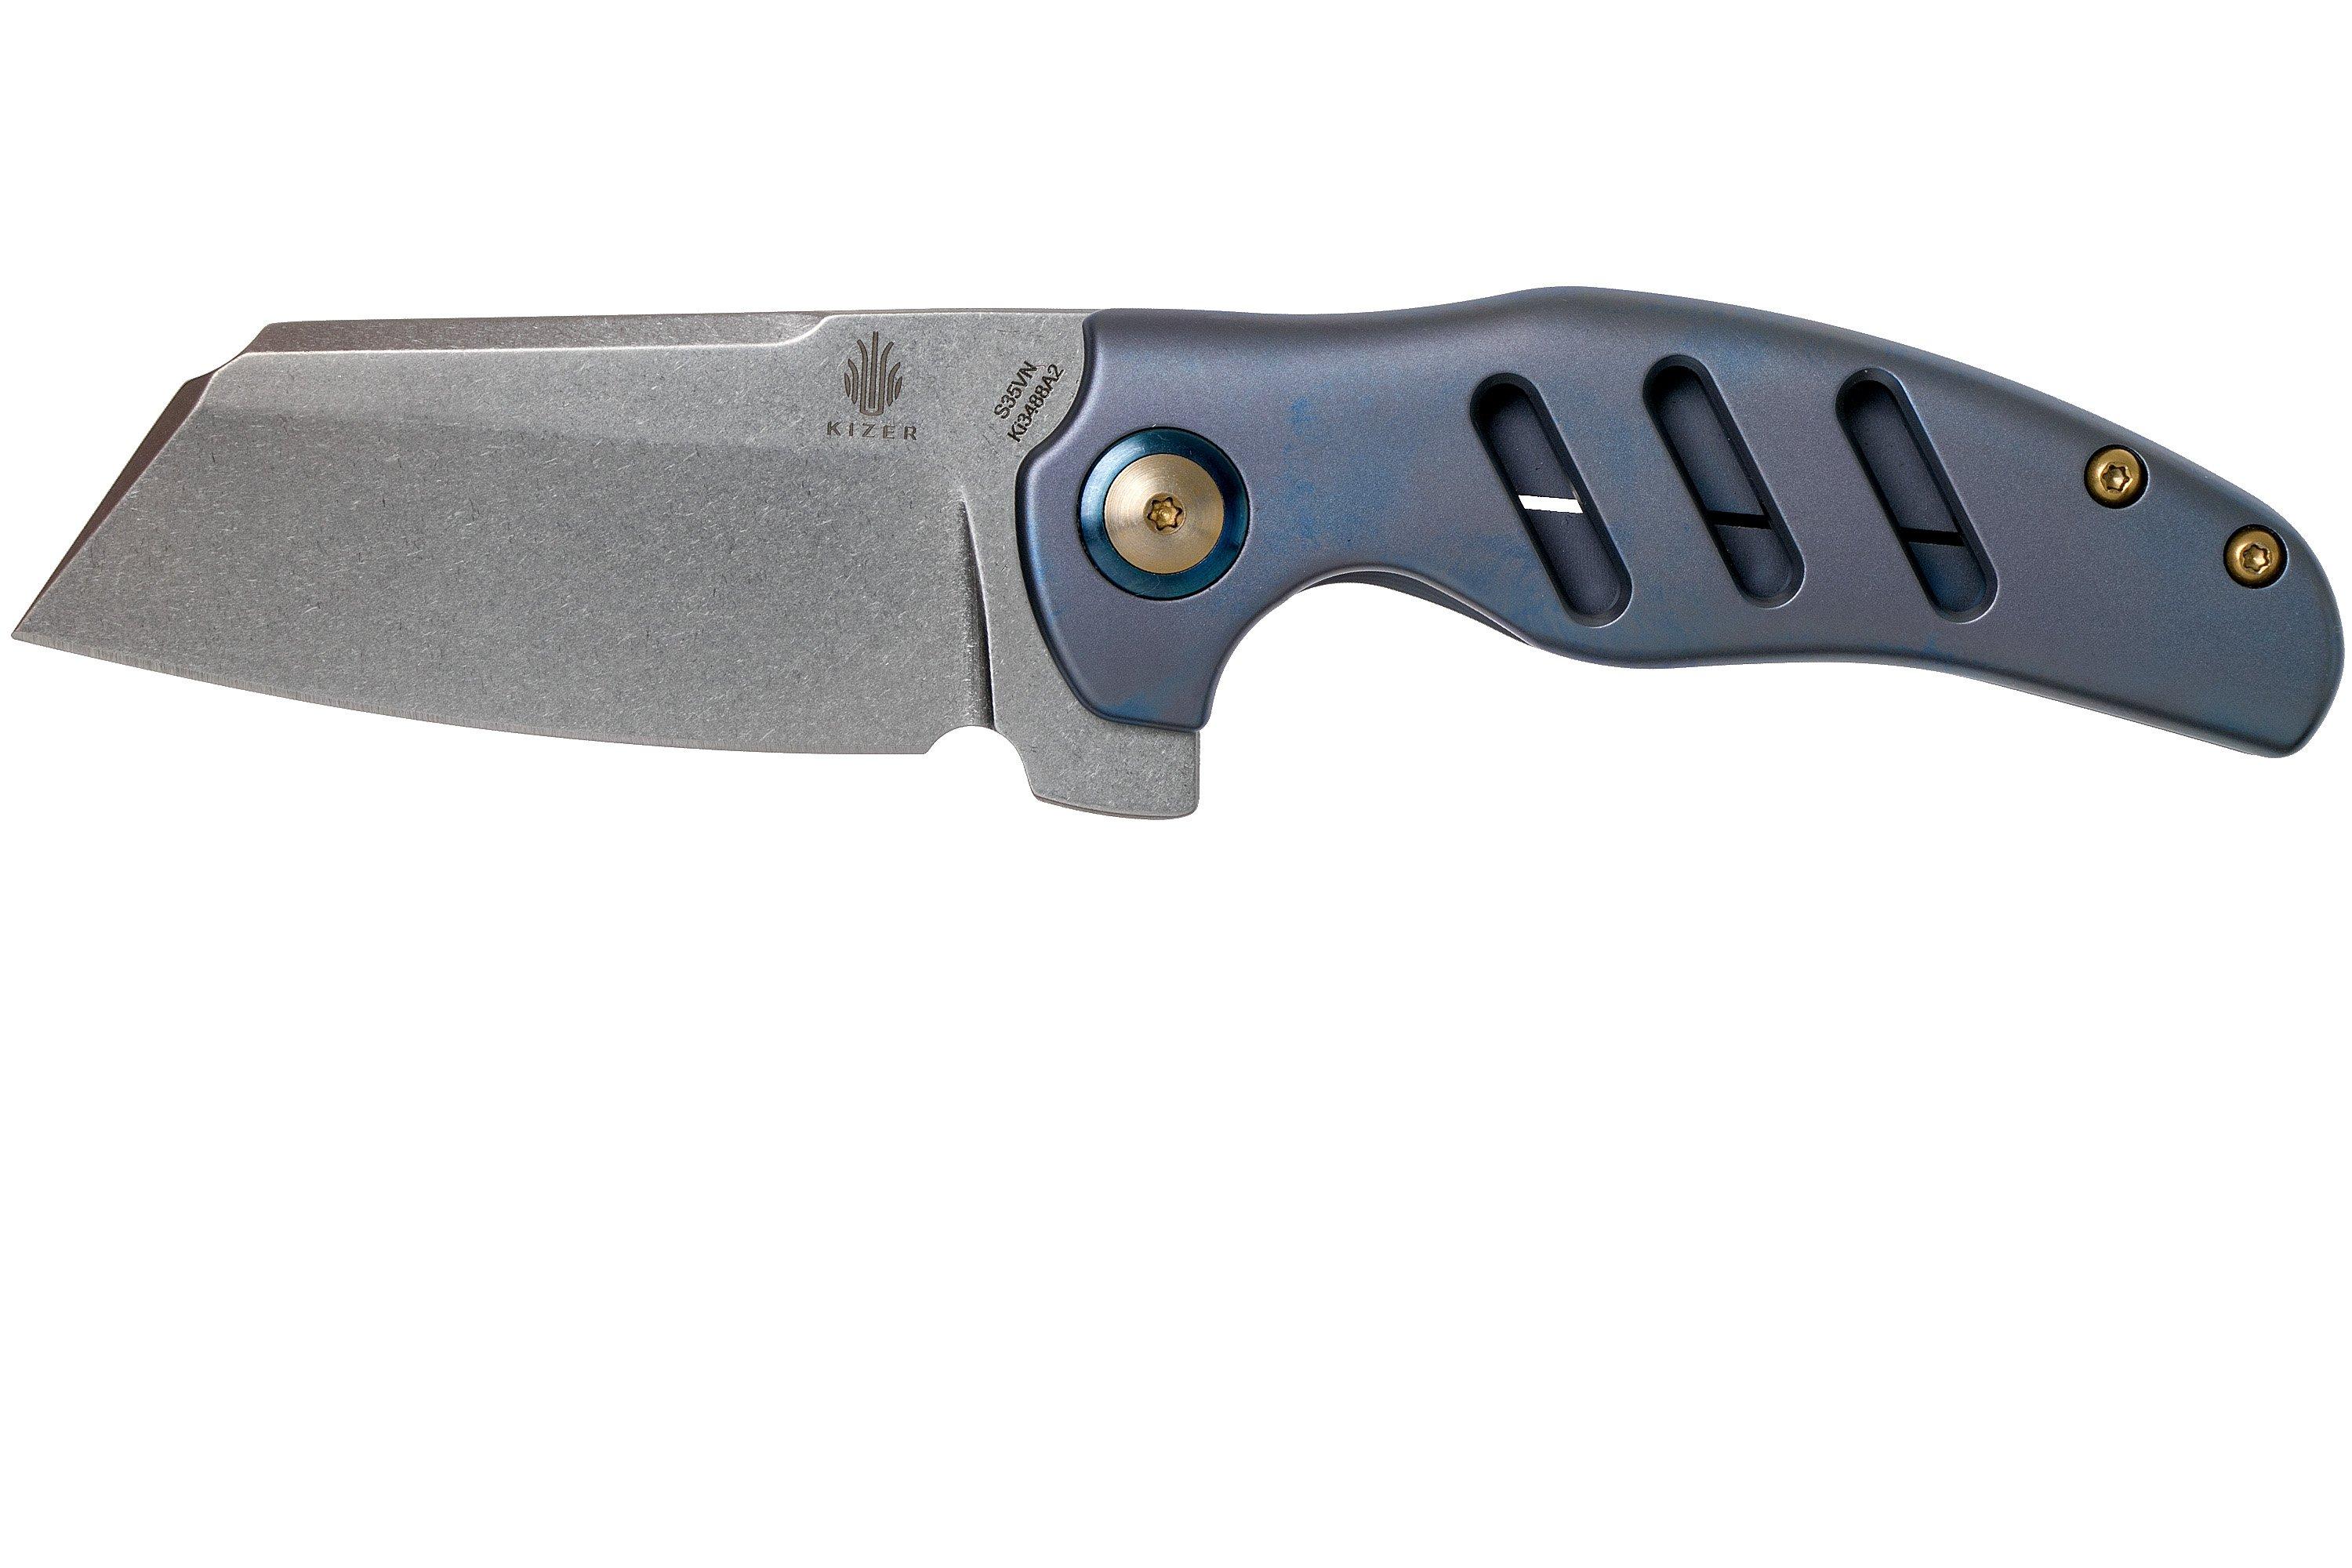 Kizer Mini Sheepdog C01C blue Ki3488A2 pocket knife 